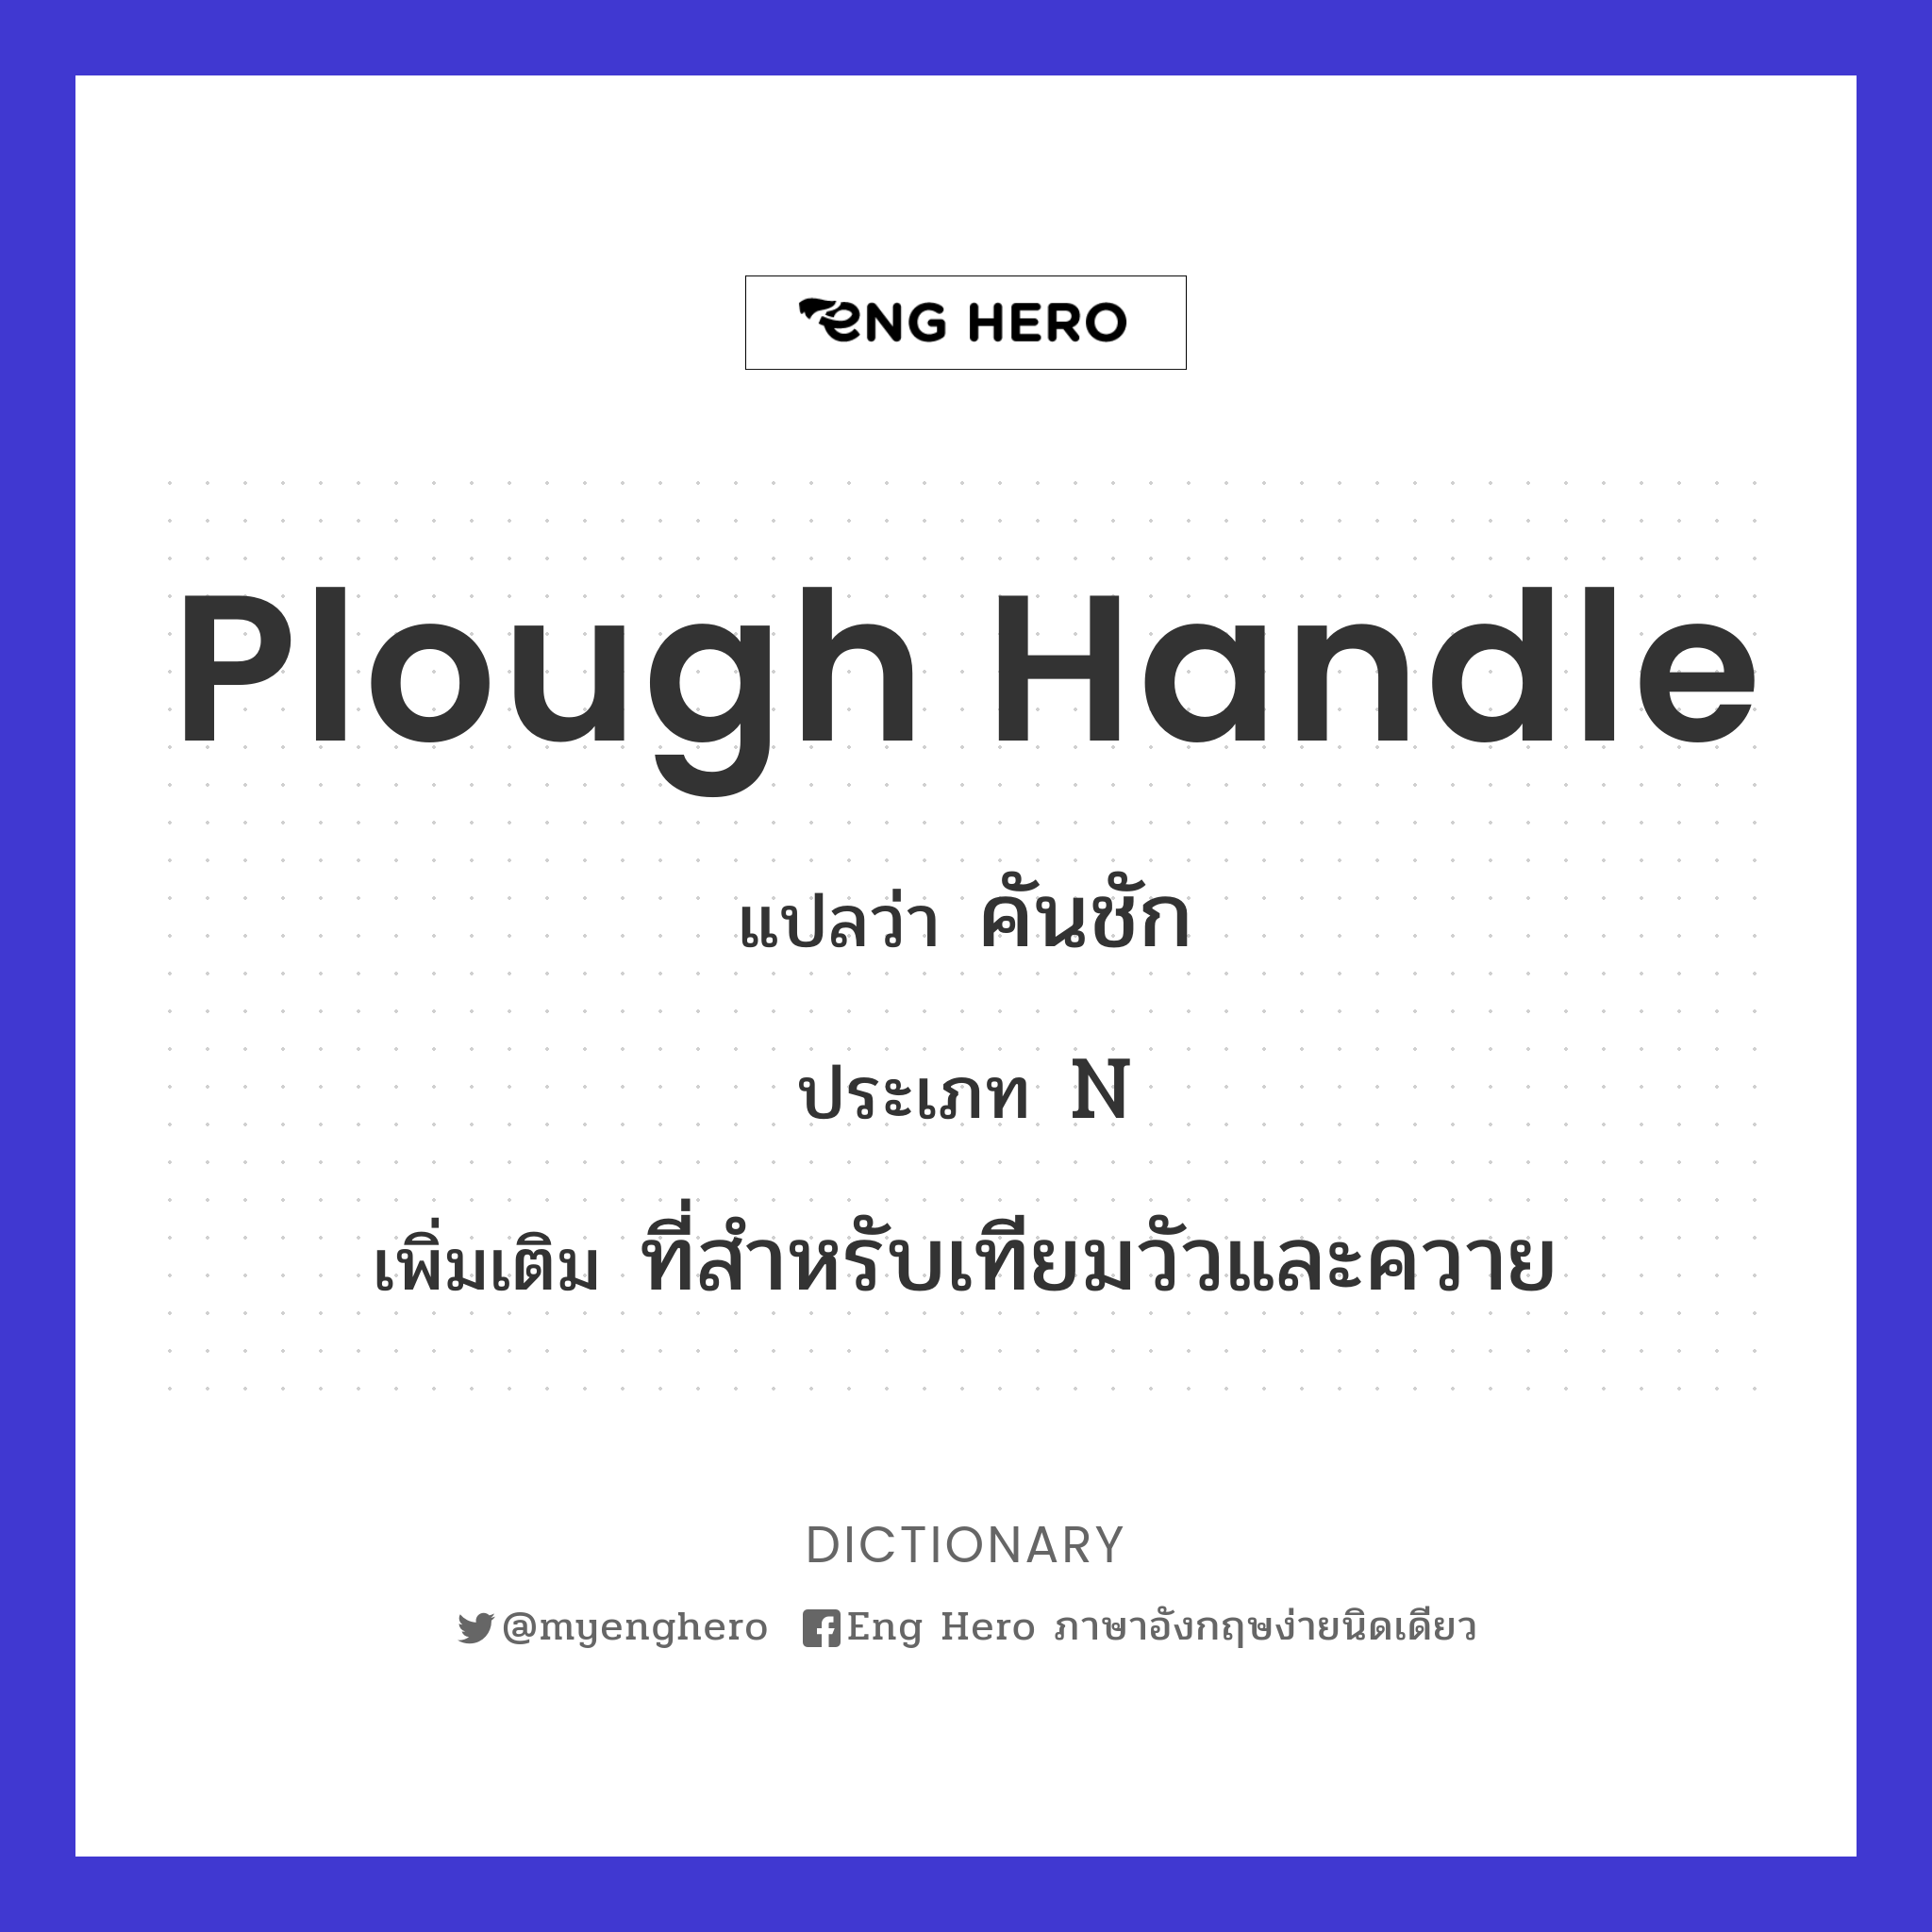 plough handle